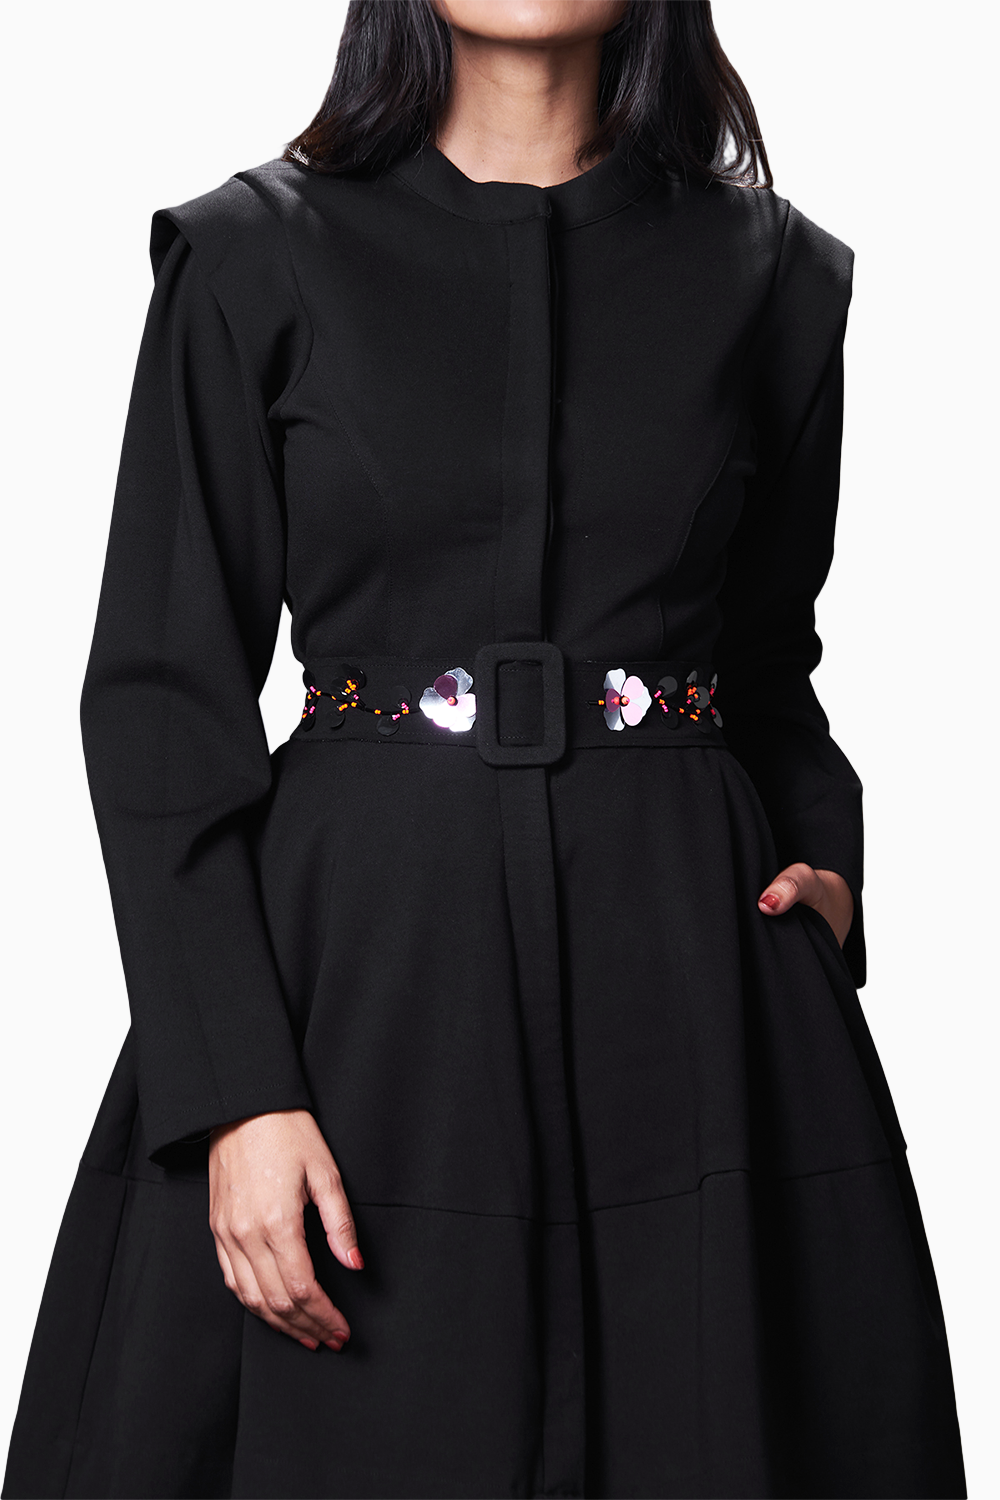 Black Jacket Dress With Hand Embroidered Belt